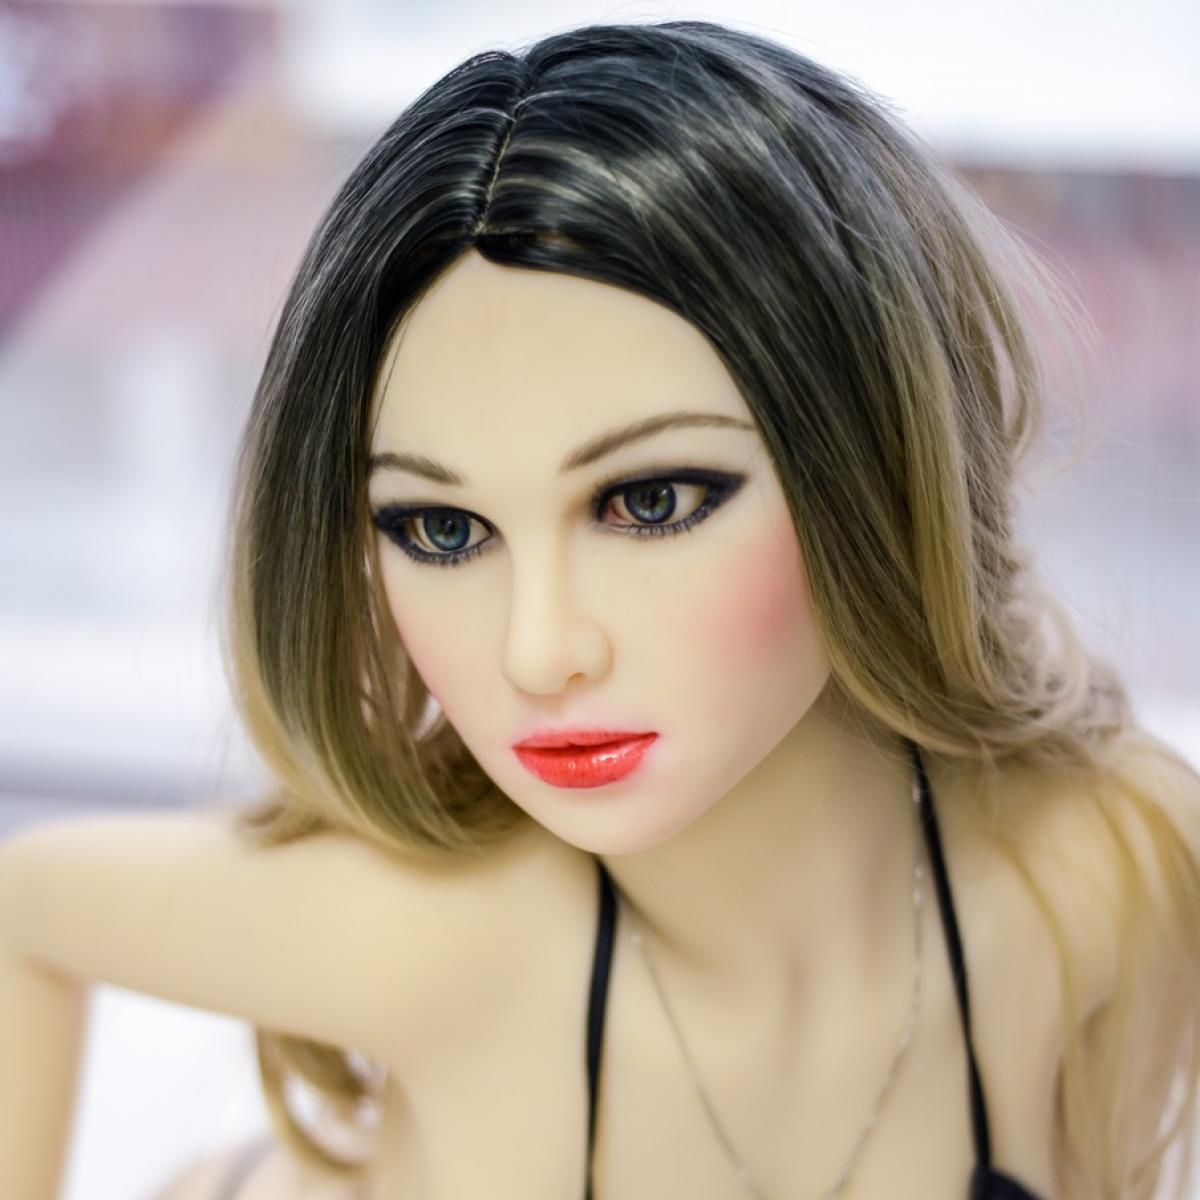 Neodoll Racy Lora Head - Sex Doll Head - M16 Compatible - White